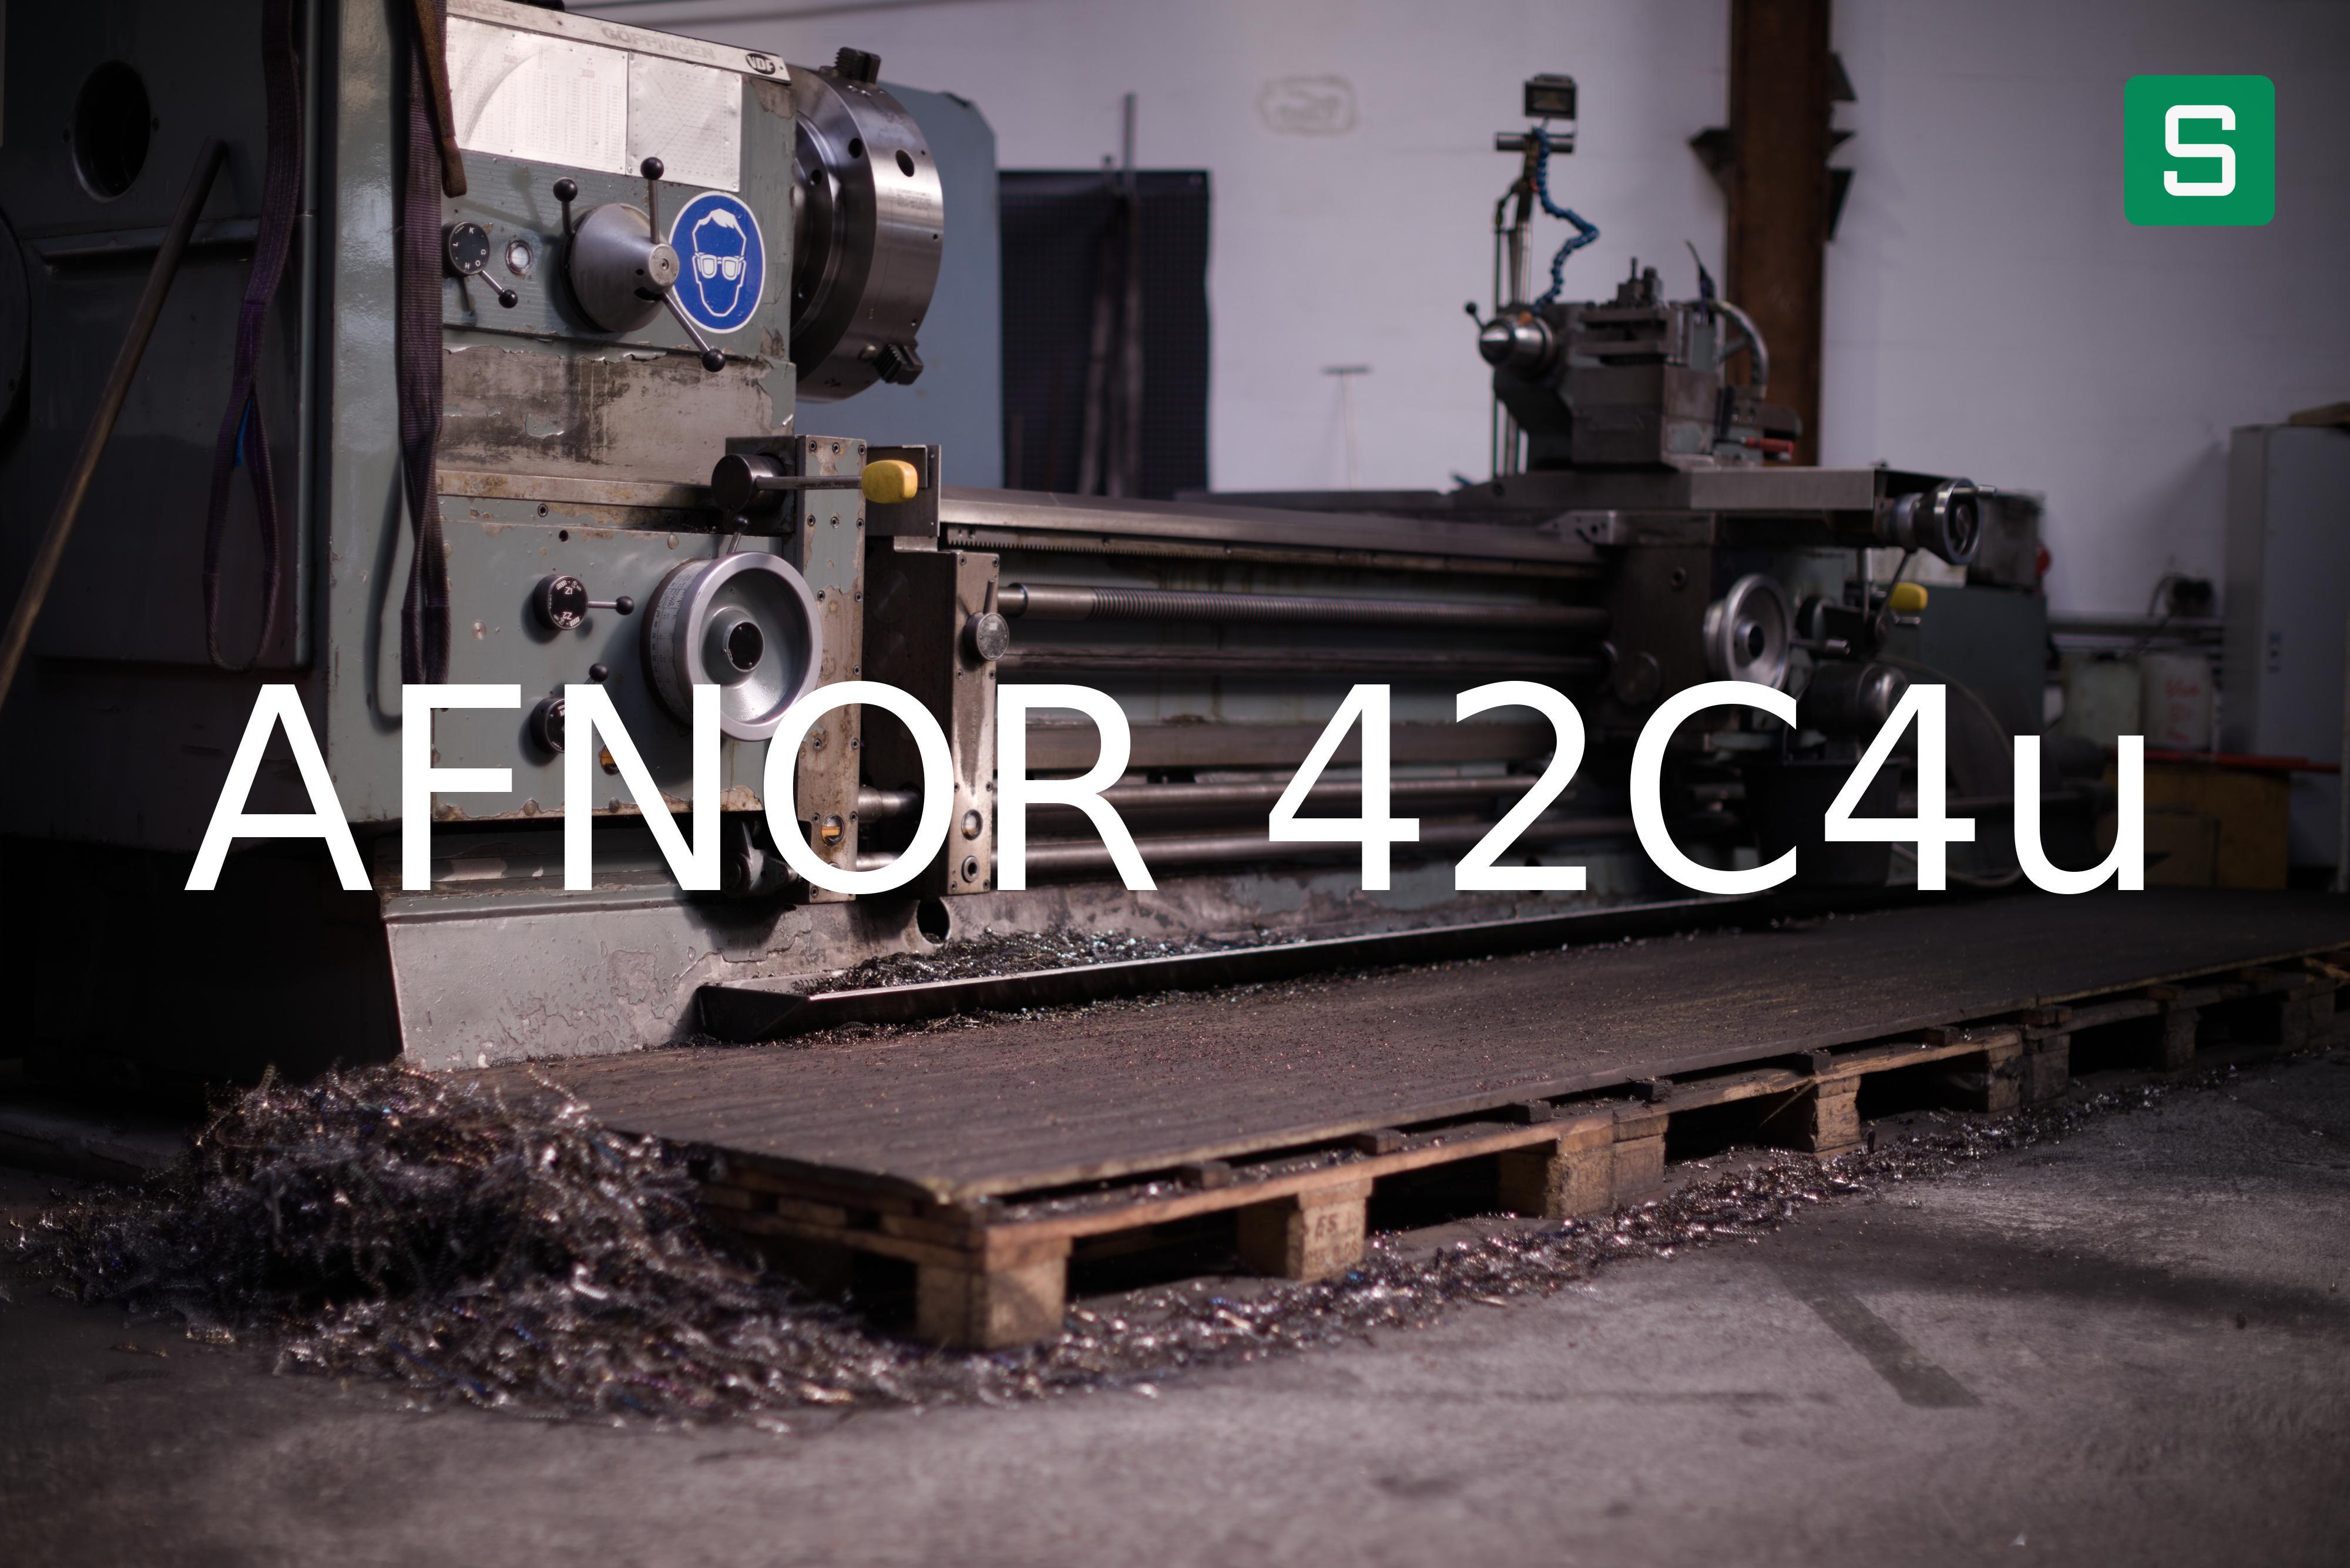 Steel Material: AFNOR 42C4u